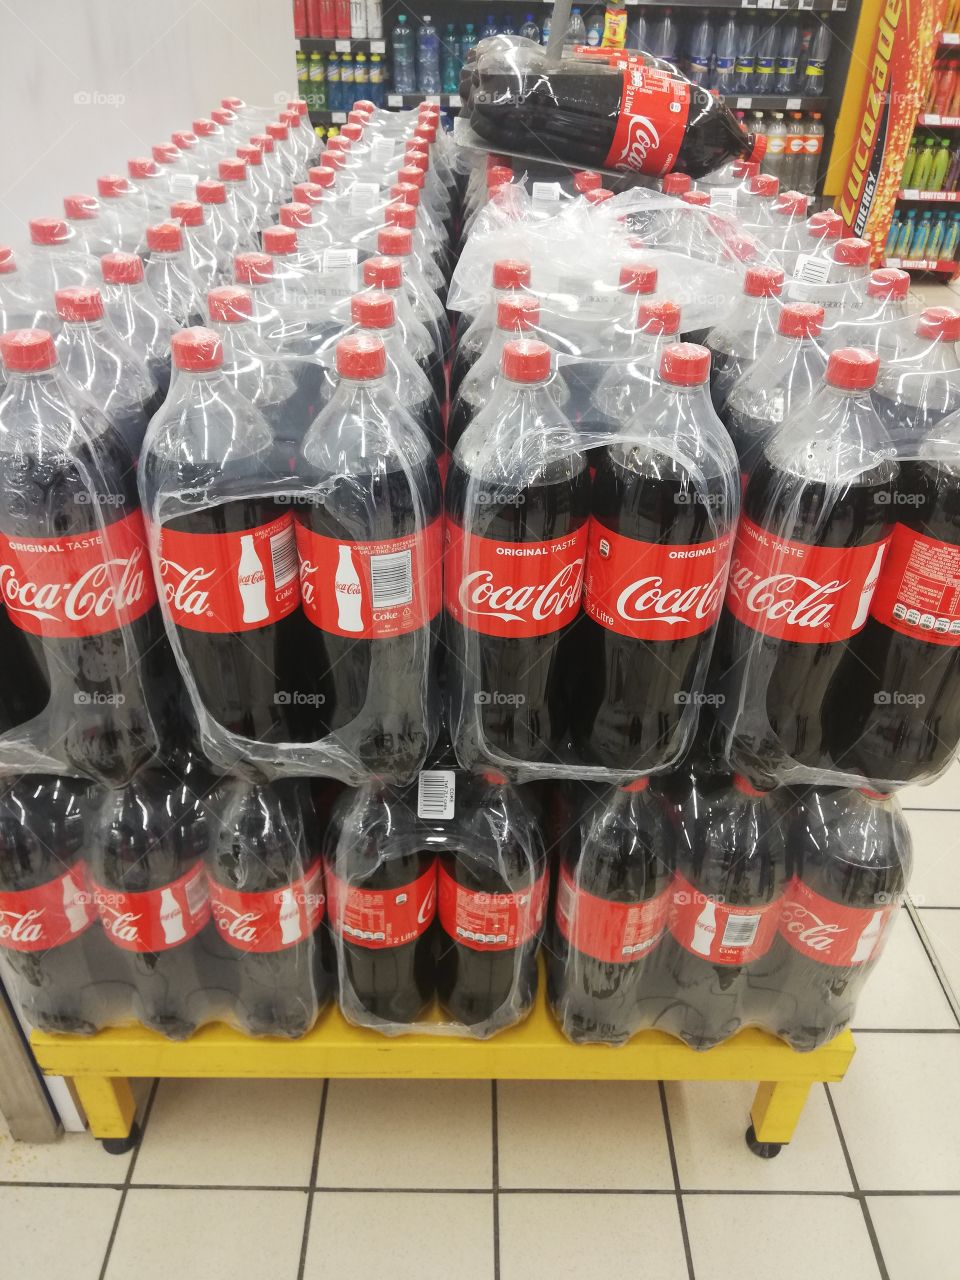 #Coca-cola